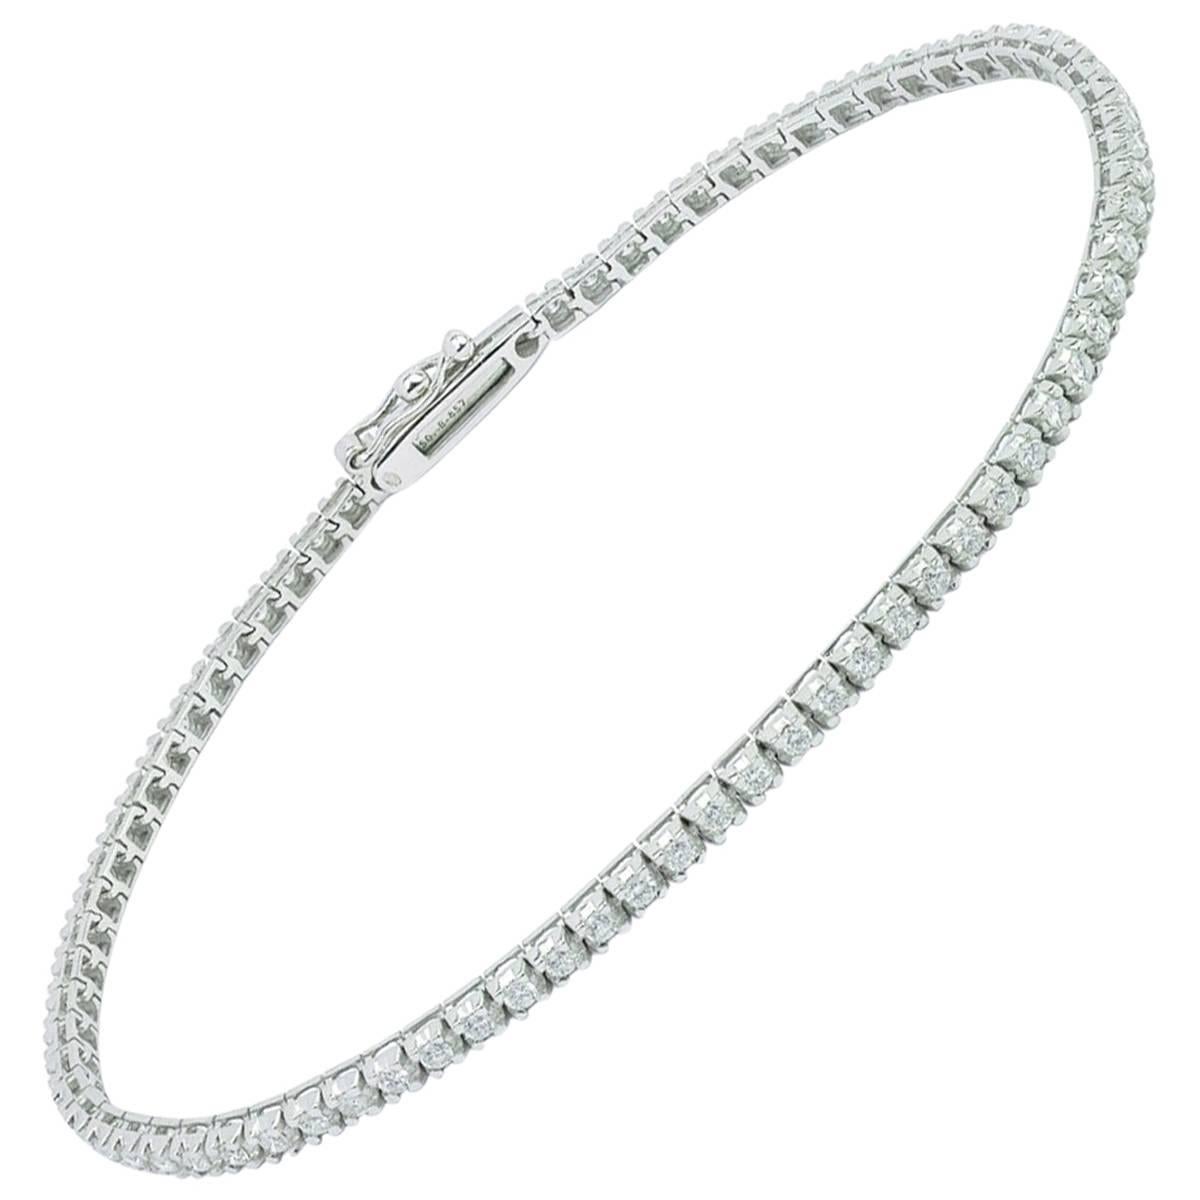 White Gold and Diamonds Tennis Bracelet